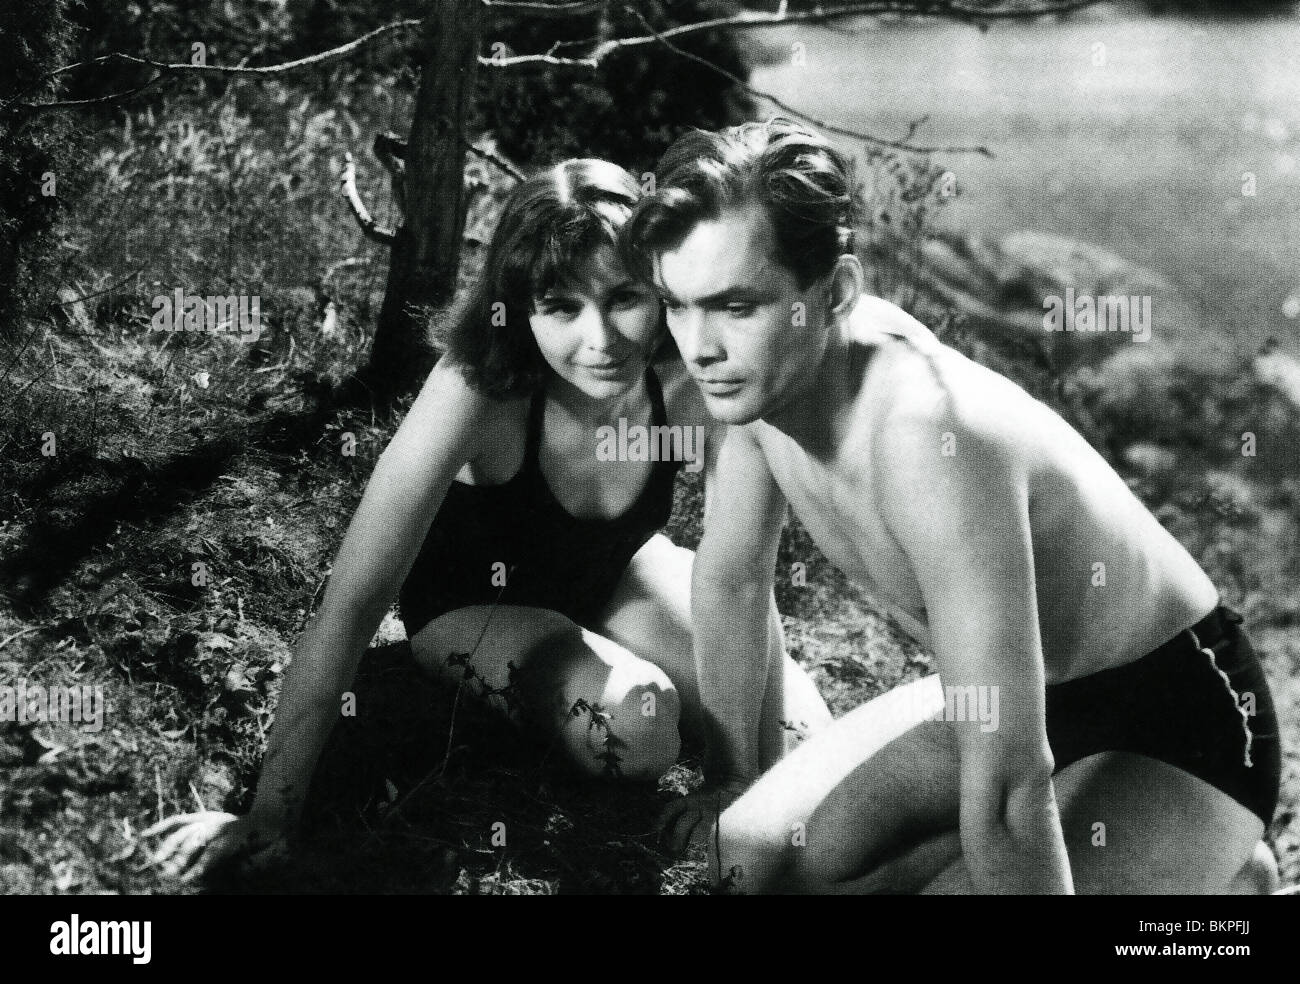 SUMMER INTERLUDE (1950) MAJ-BRITT NILSSON, BIRGER MALMSTEN INGMAR BERGMAN (DIR) SUMI 001 Stock Photo